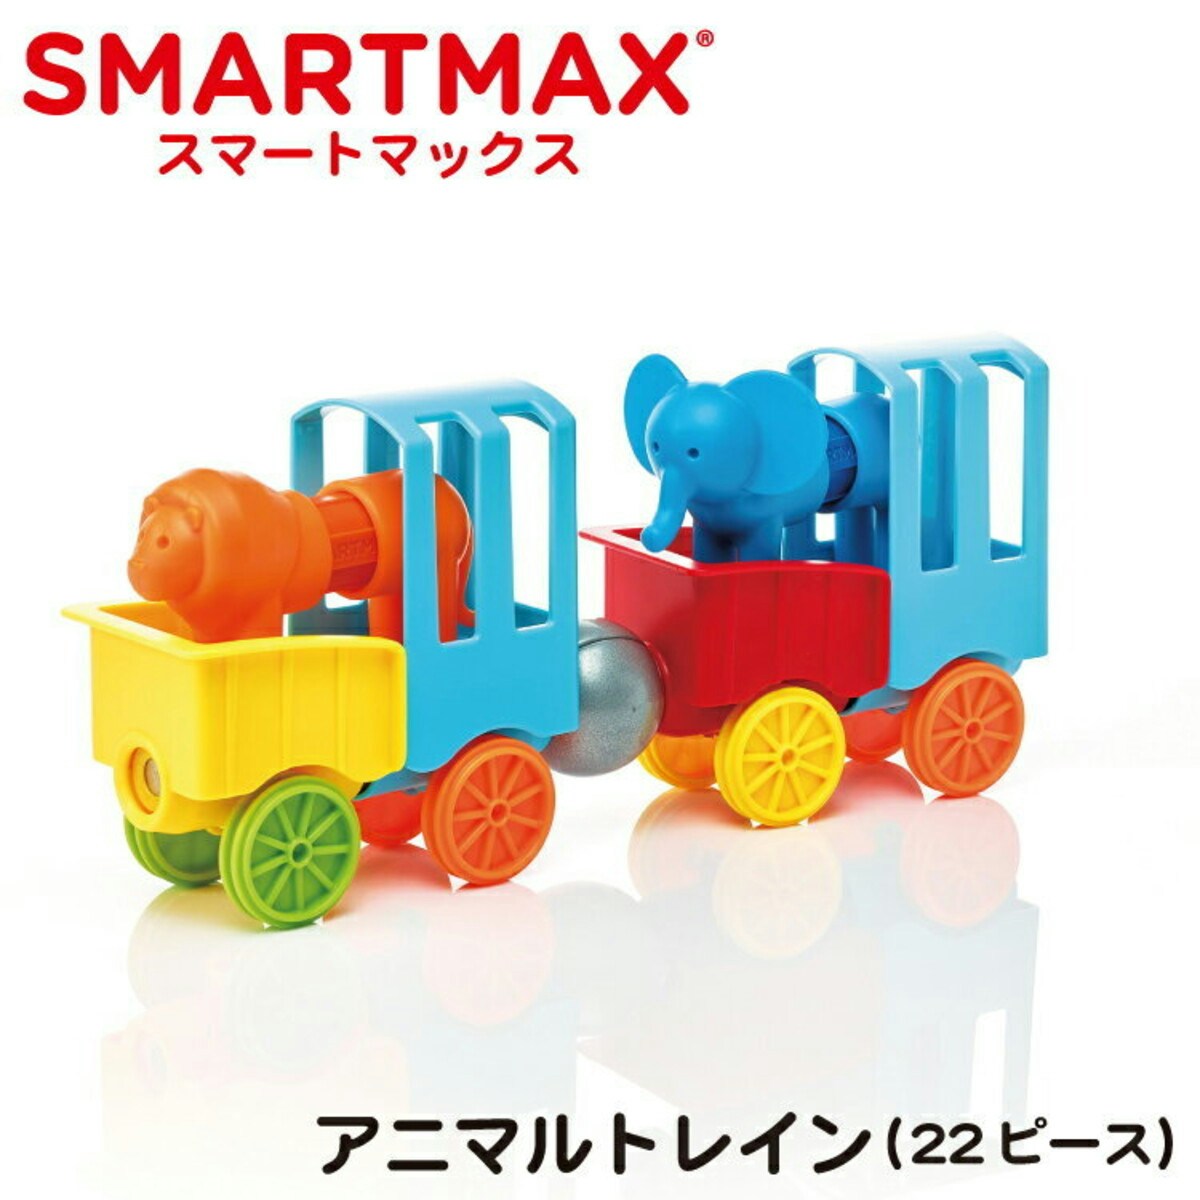 SMART MAX (スマートマックス)「はじめてのスマートマックス アニマルトレイン」